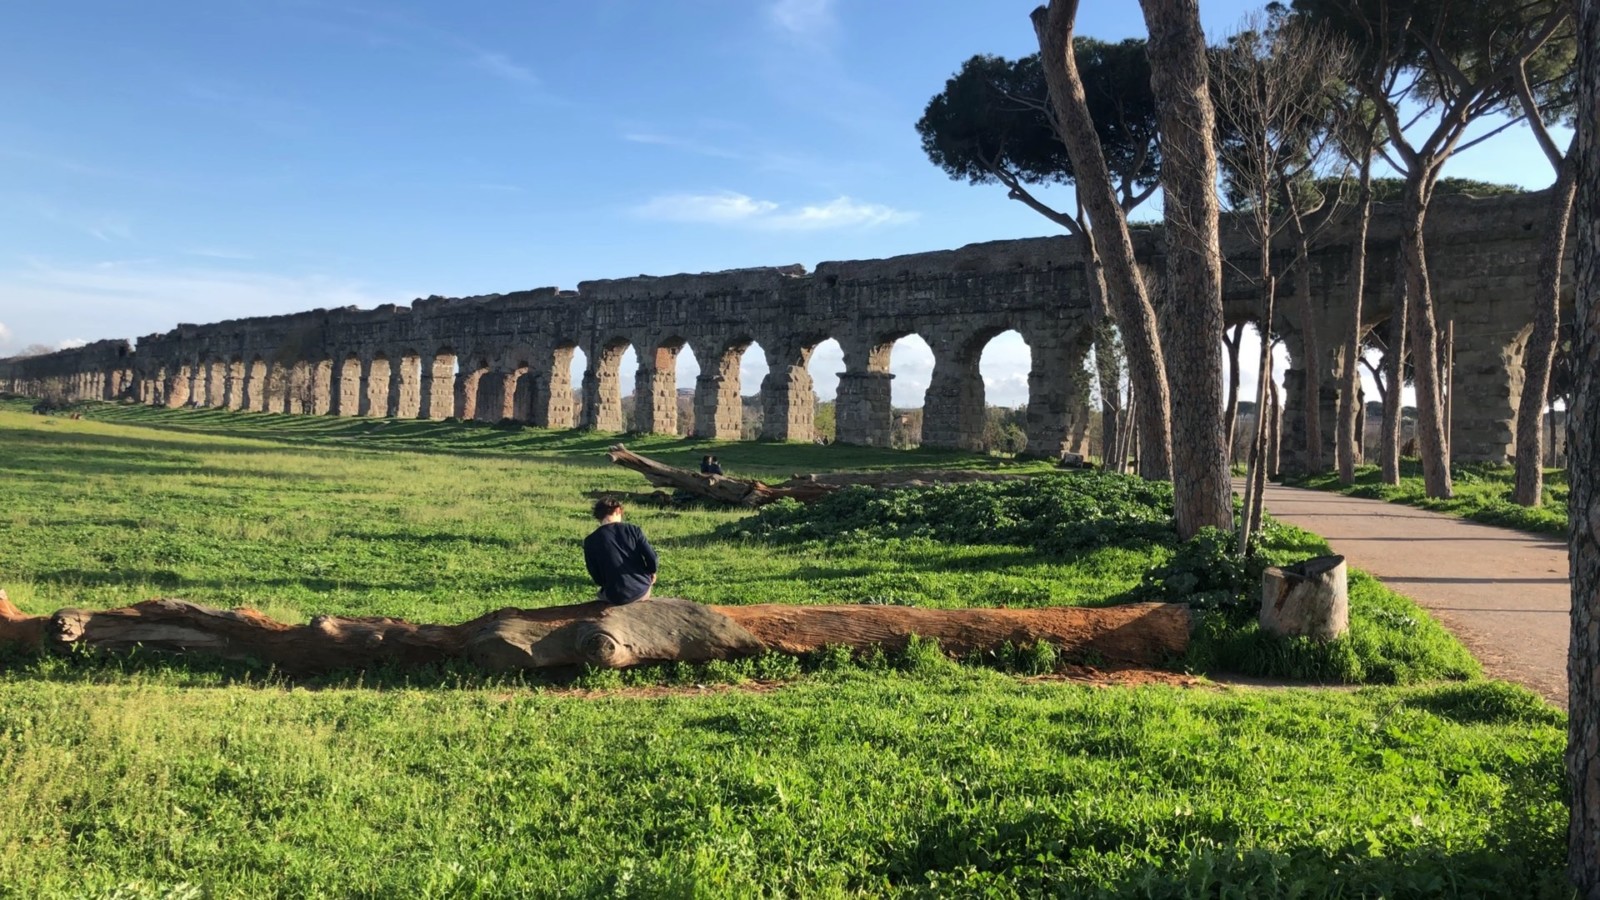 A stretch of ancient Roman aqueduct in the Parco degli Acquedotti